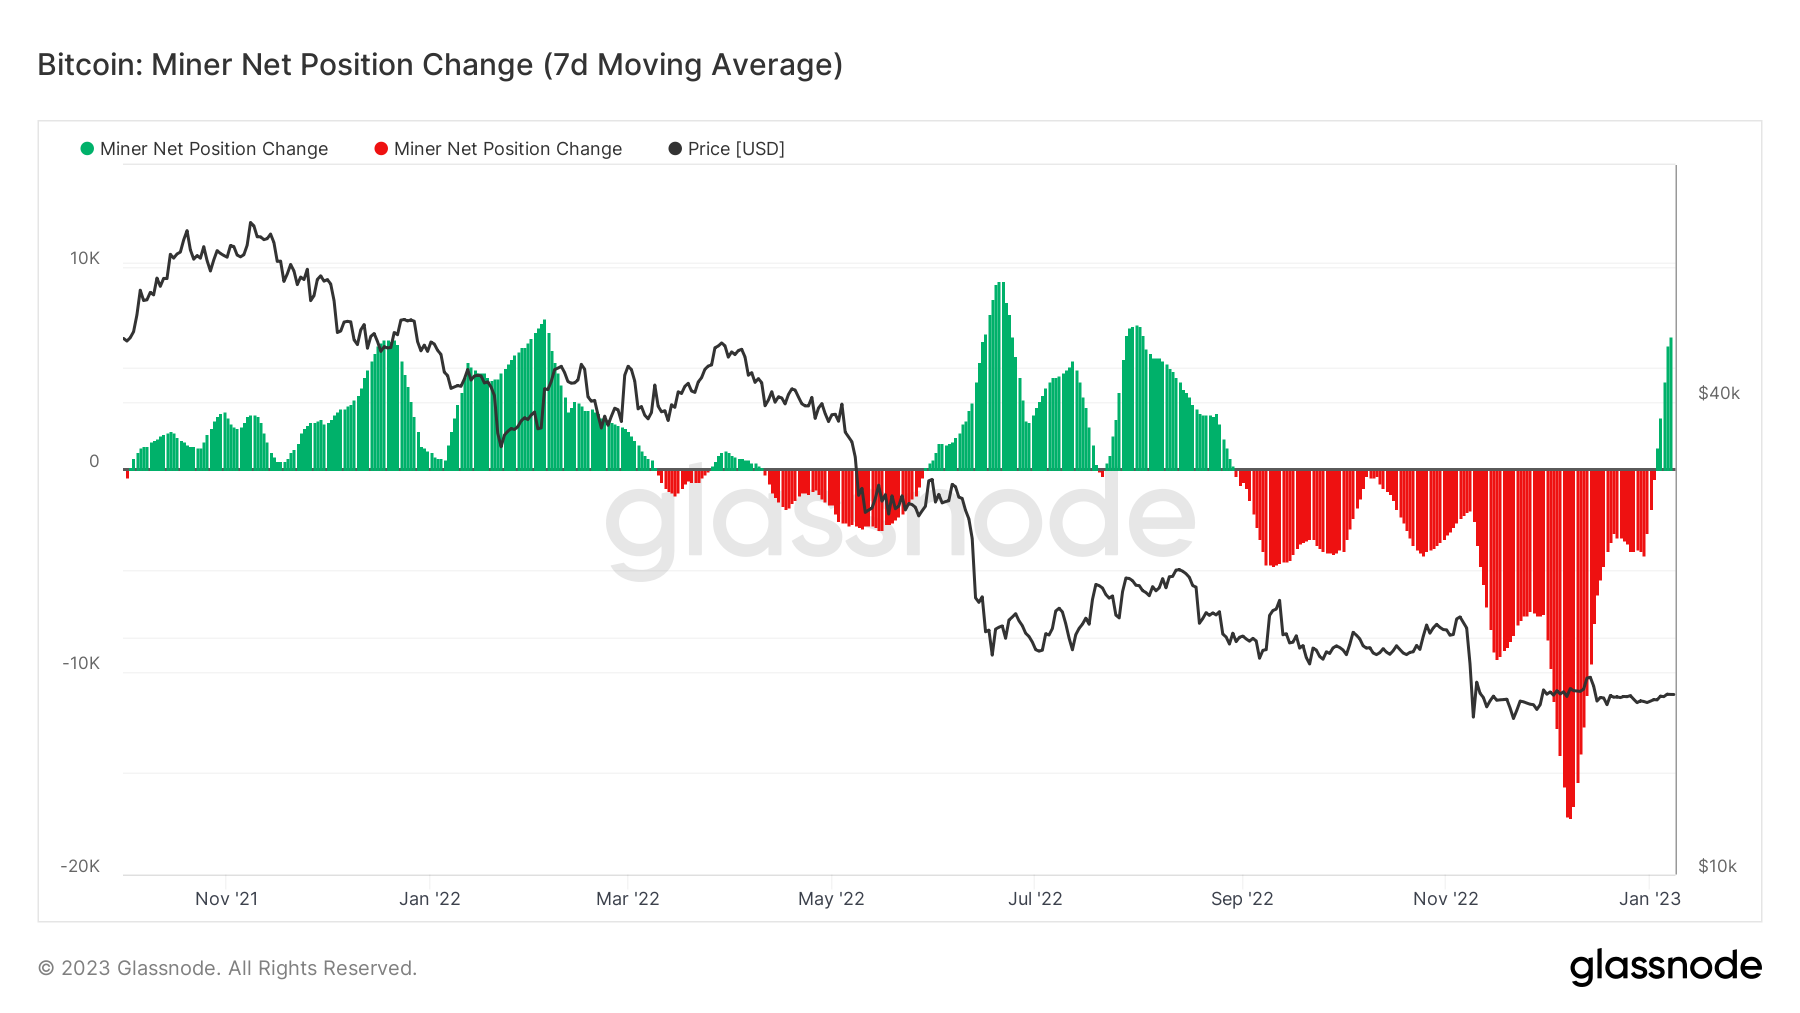 Bitcoin miner net position change (7d moving average)